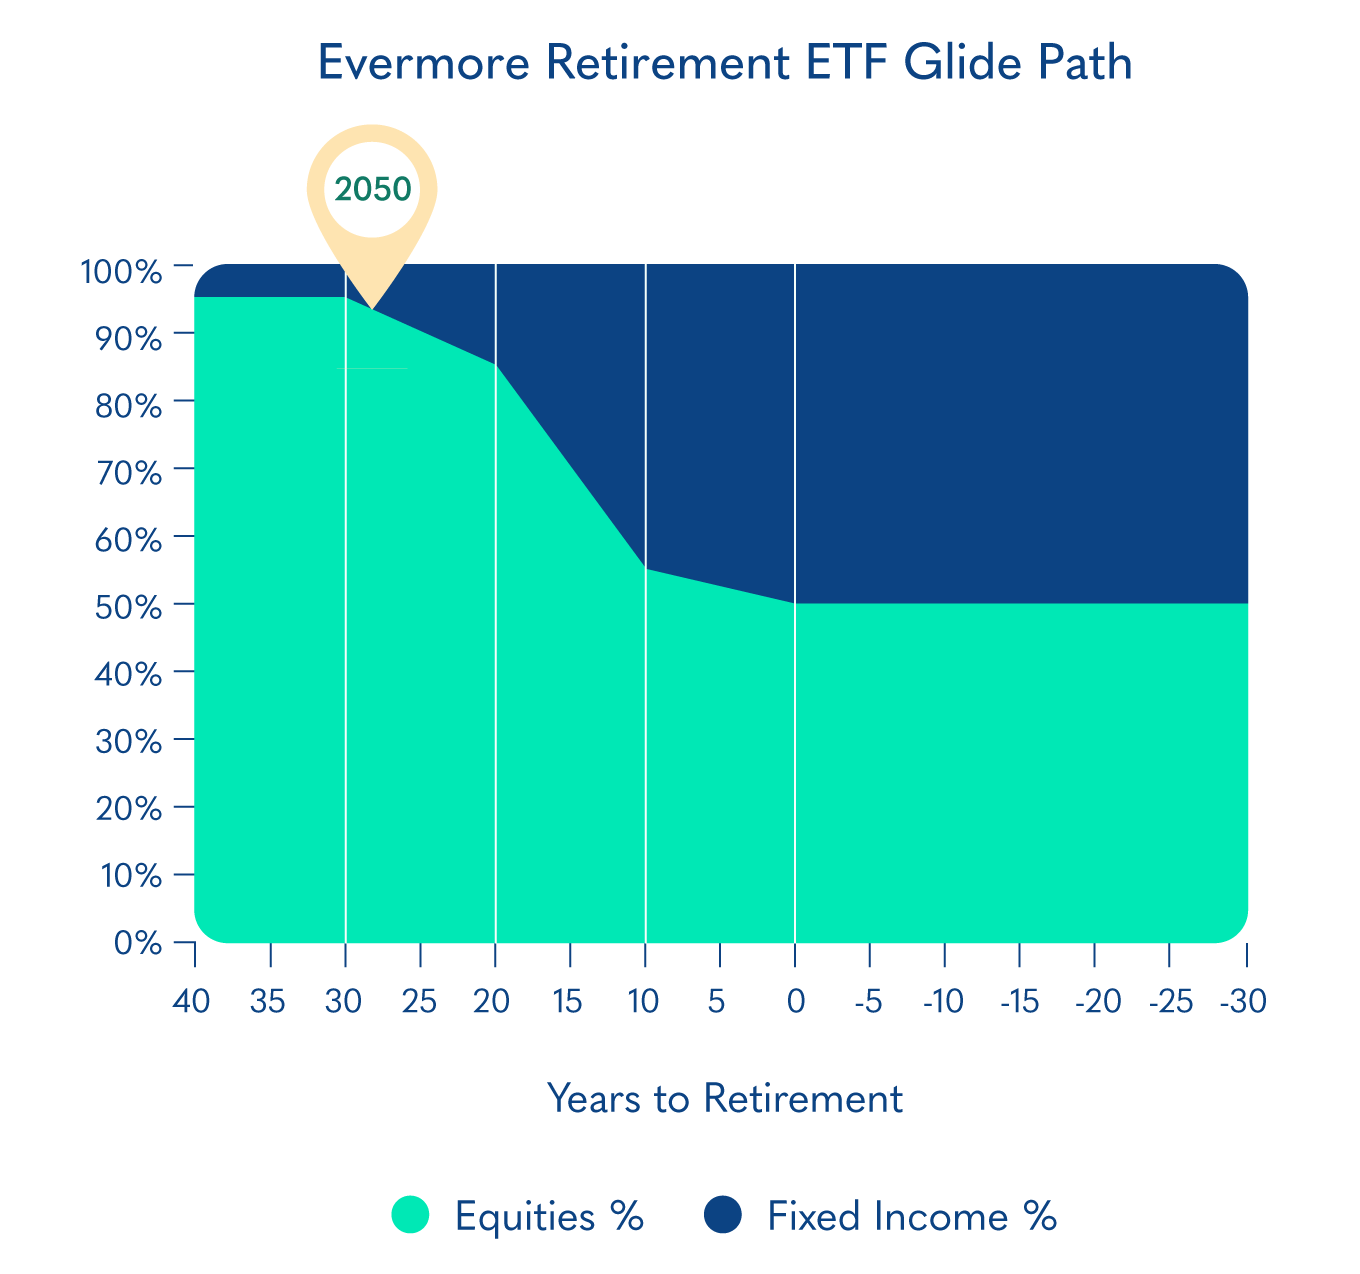 Evermore Retirement 2050 ERFO Glide Path